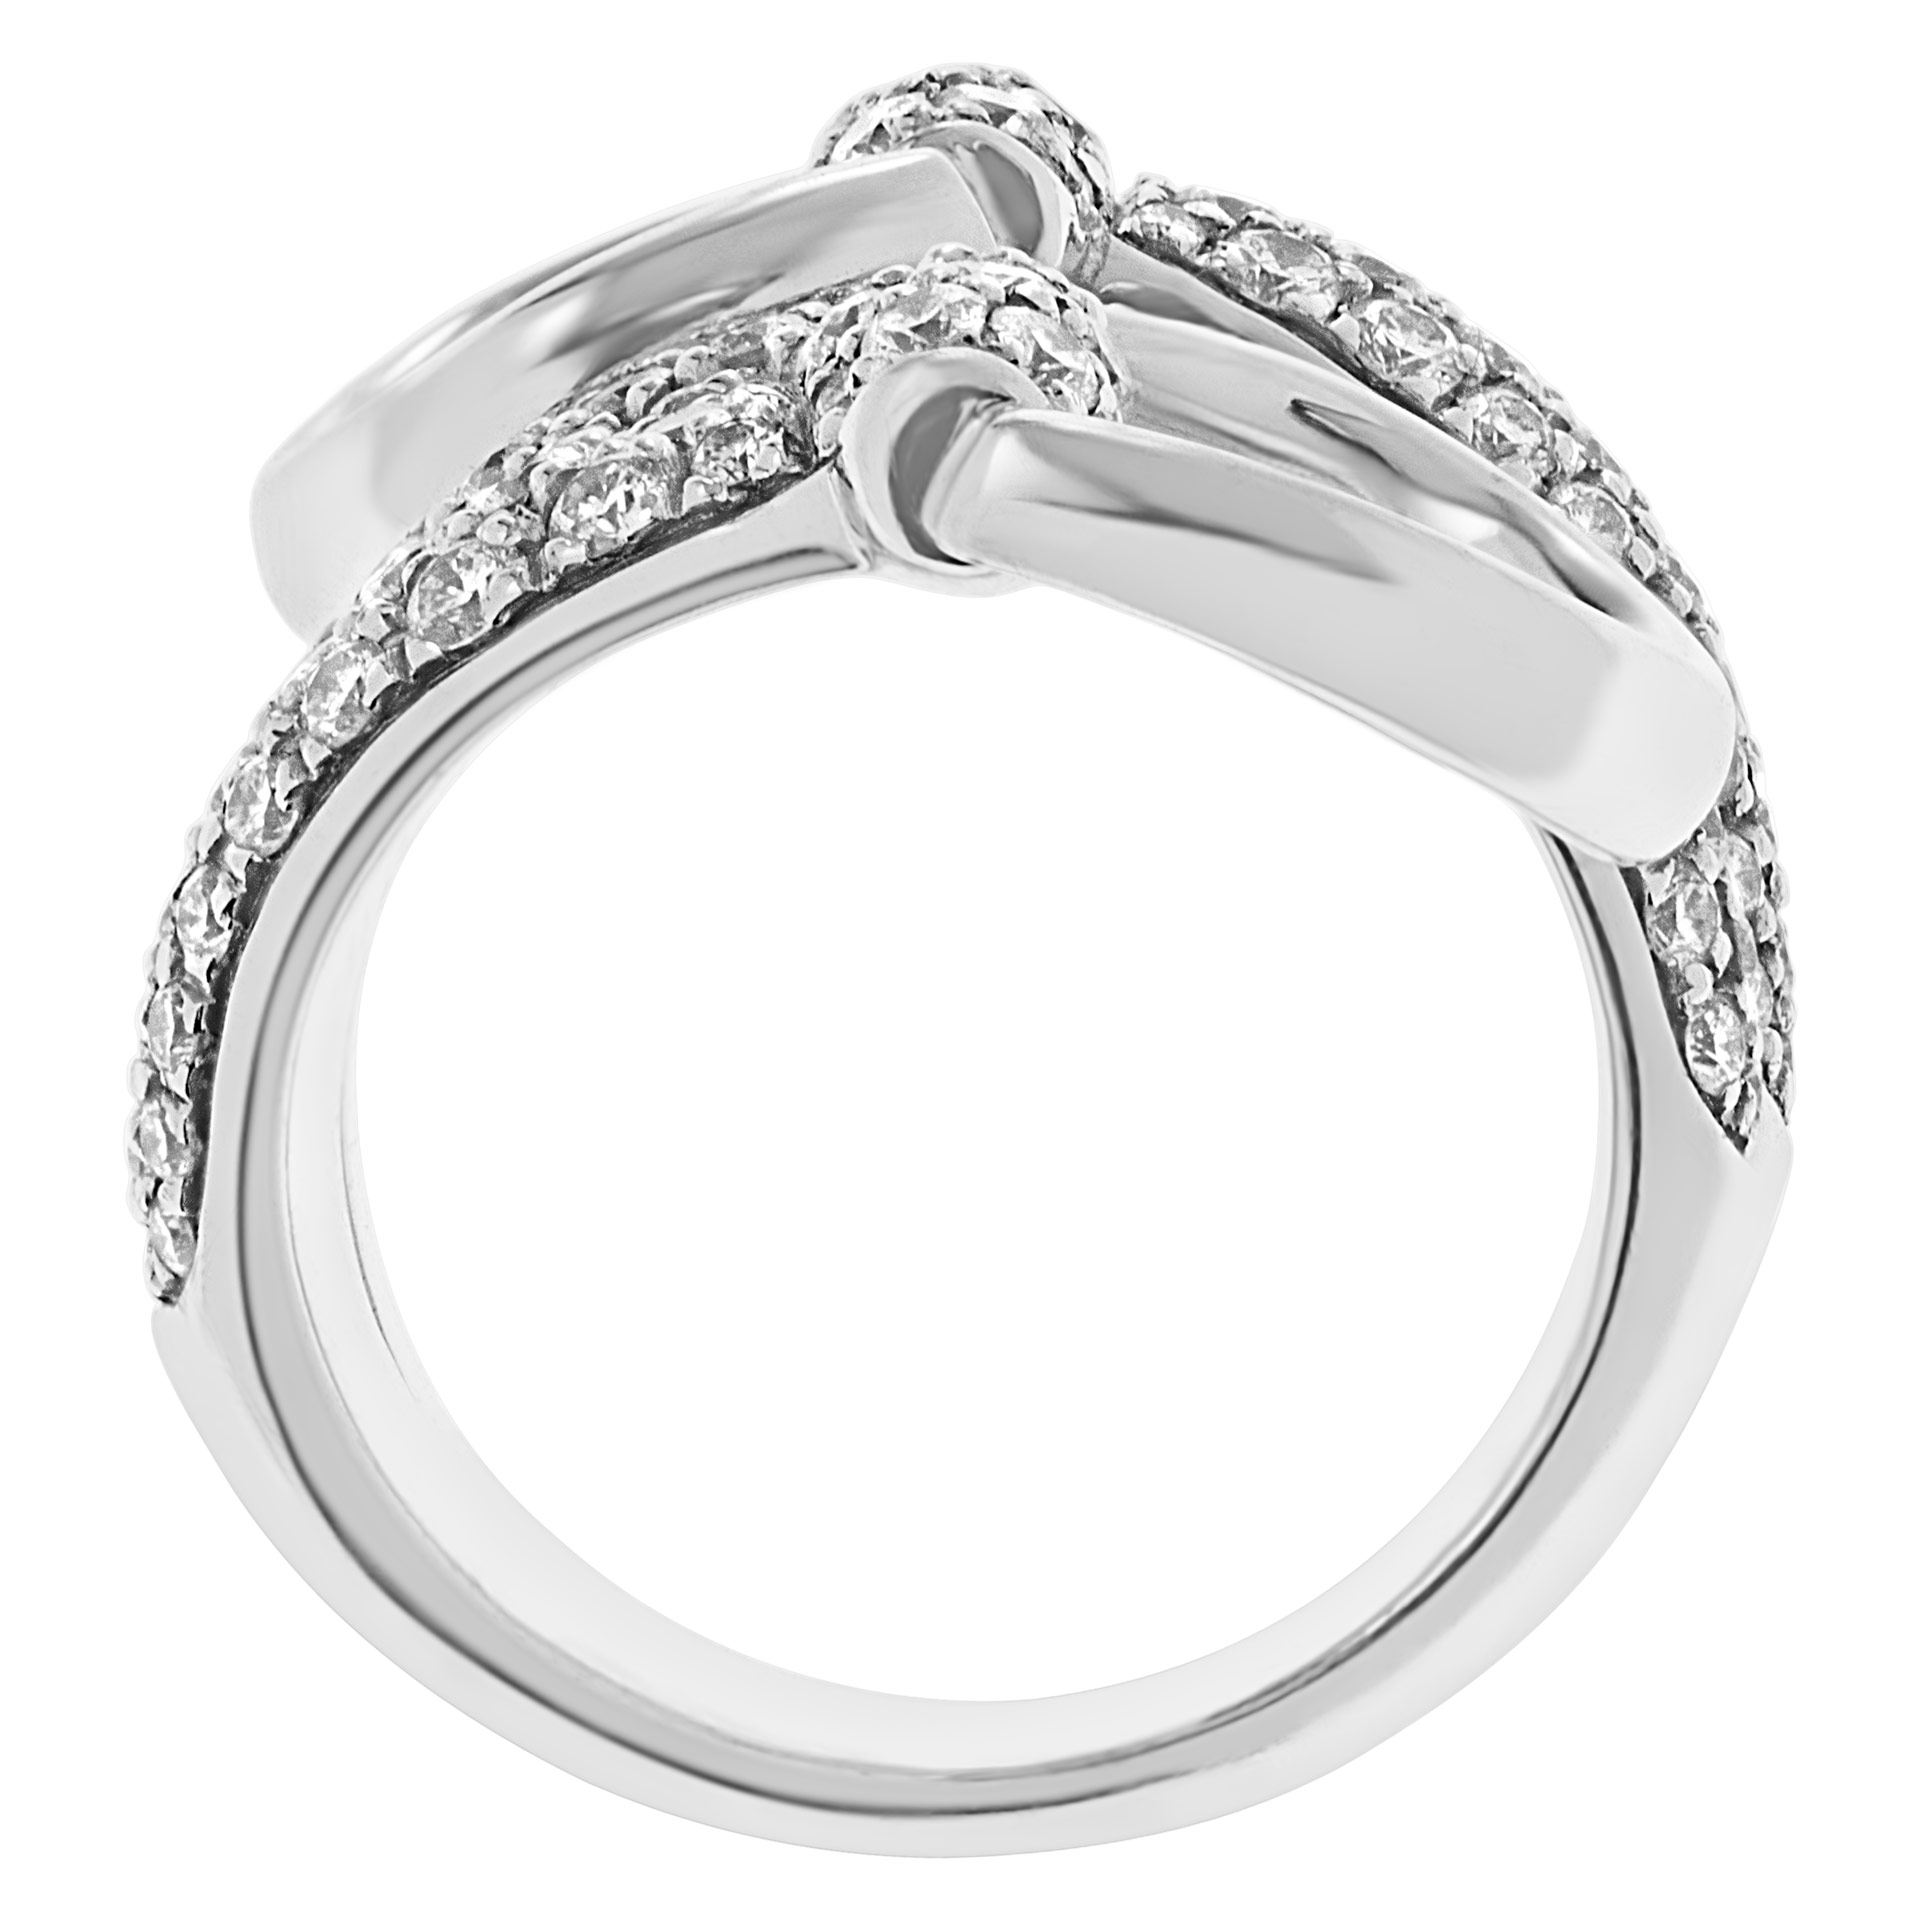 Gucci Horsebit diamond ring in 18k white gold. 1.98 carats. Size 6 image 2